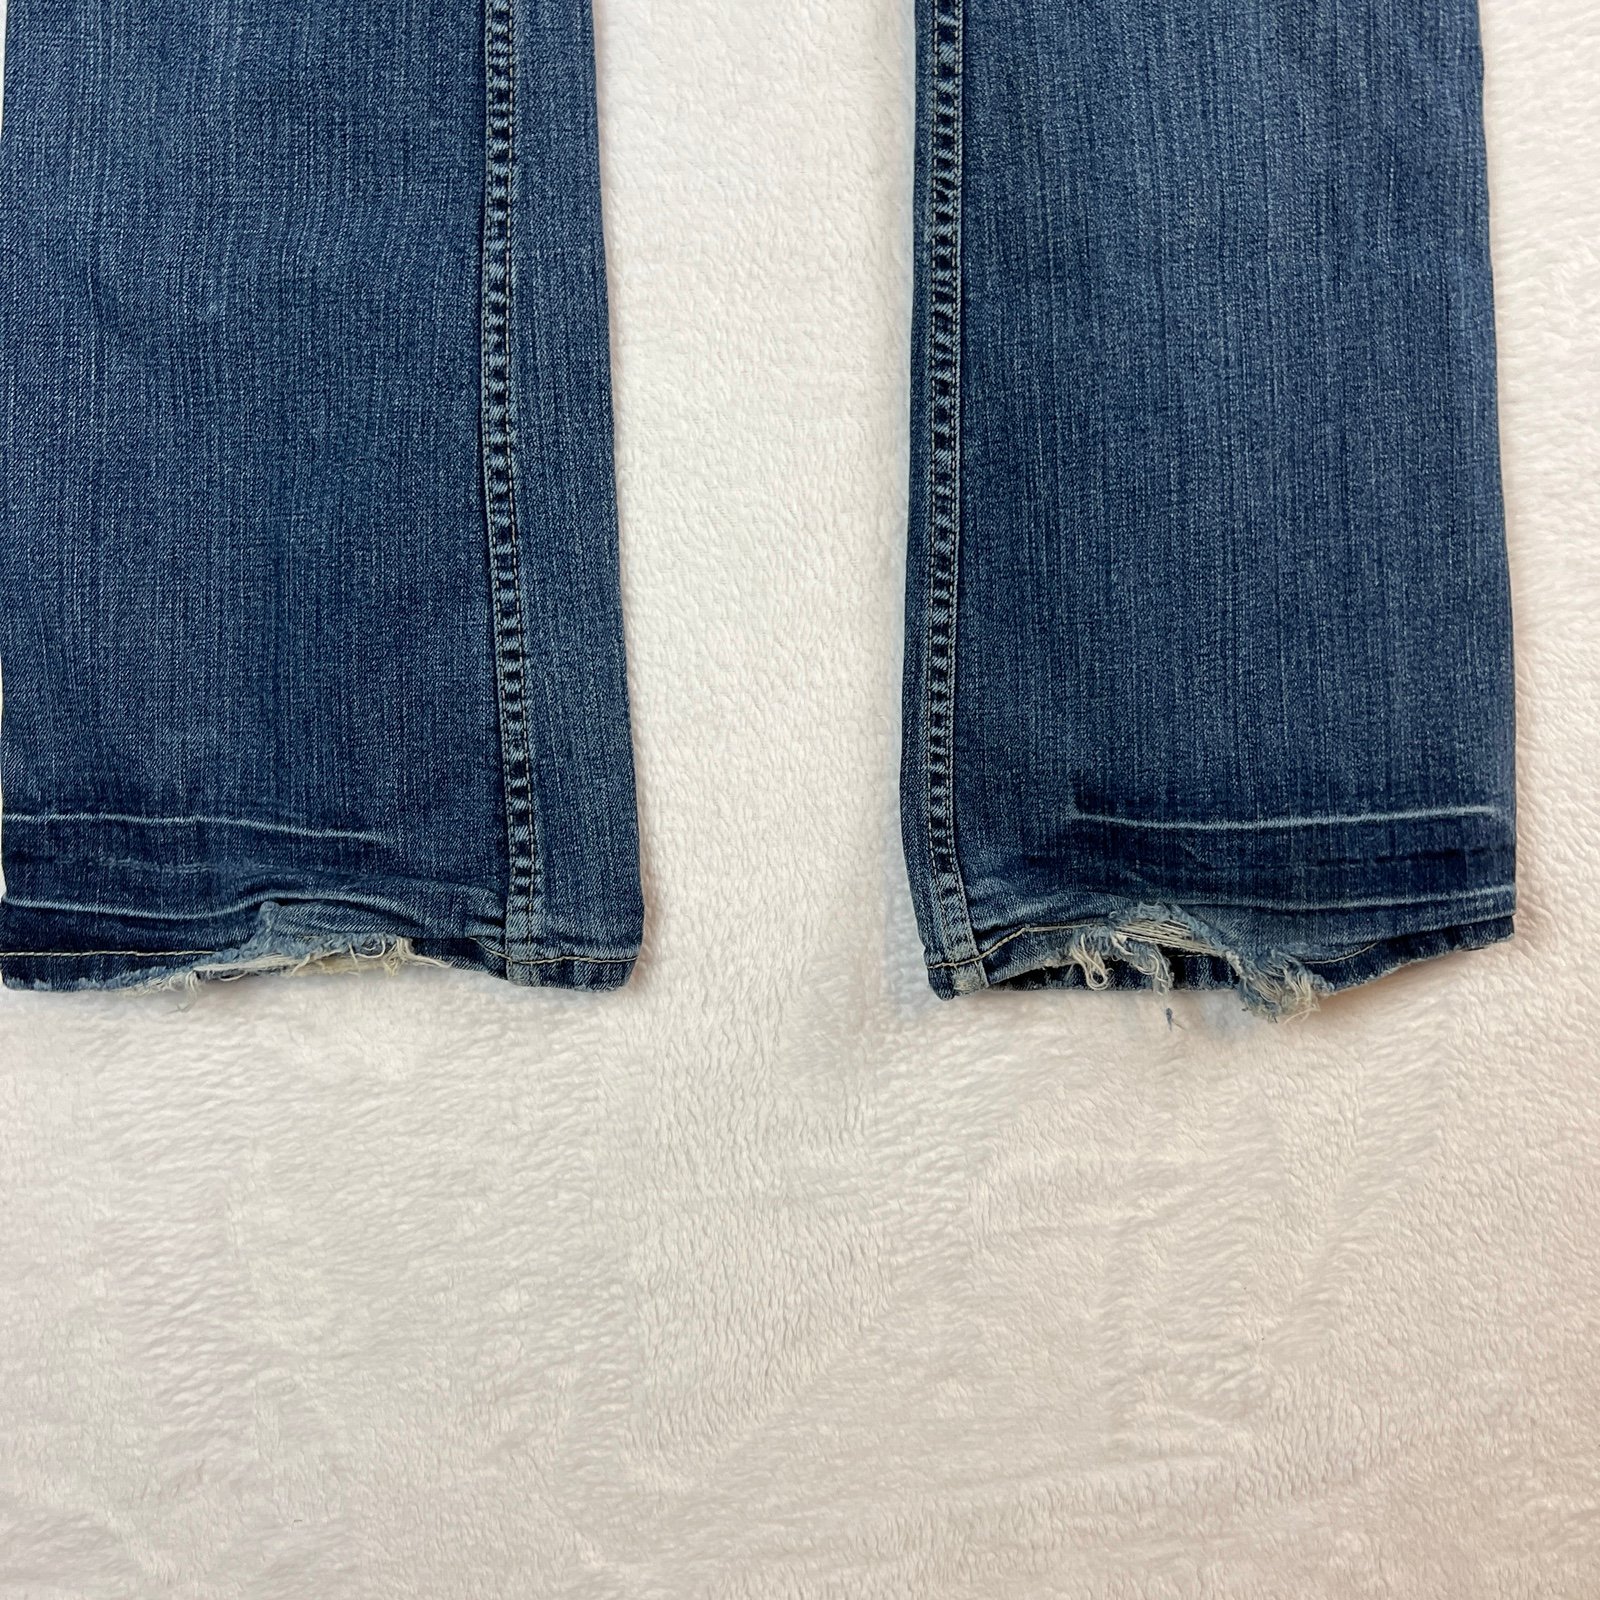 BKE Jeans Men´s 28x31 Blue Bootcut Faded Distressed Medium Wash Stretch Denim Fy5uYqcIc